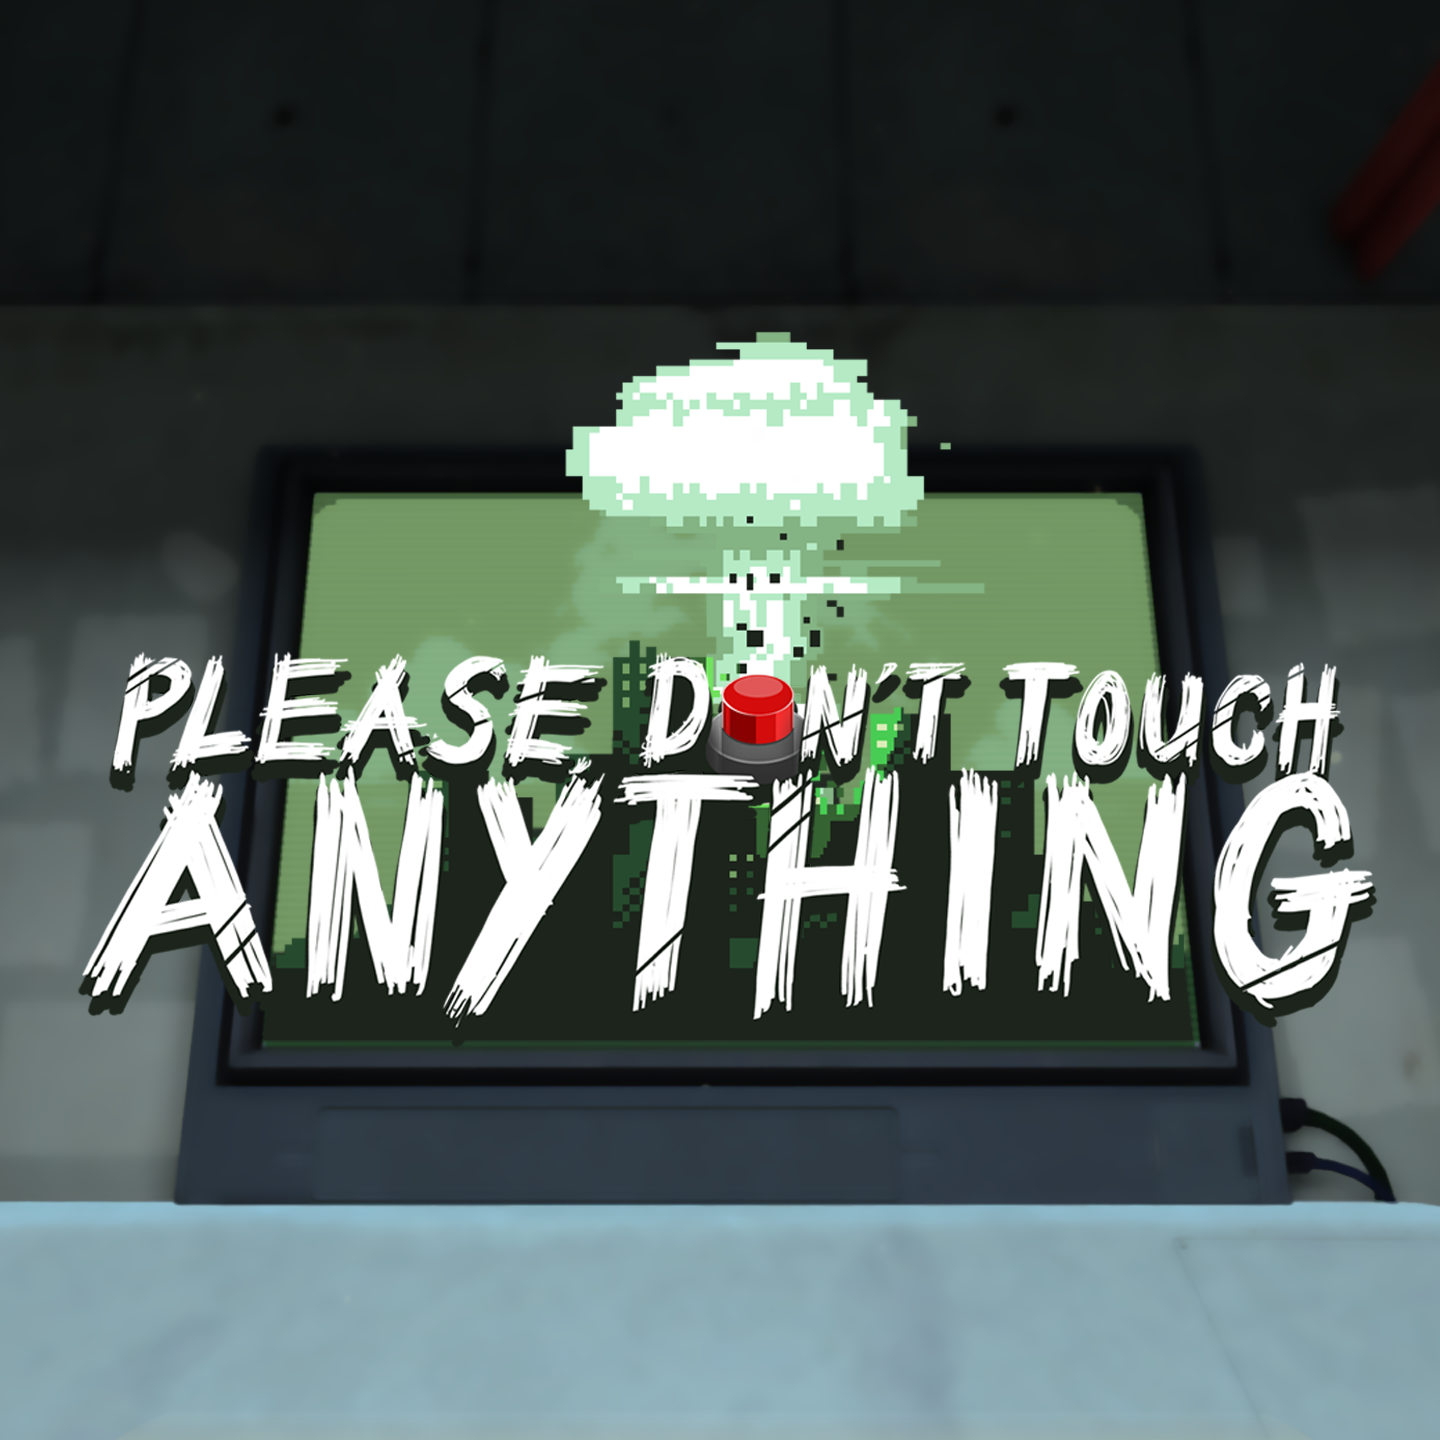 Please don t make noise. Please don`t Touch anything. Please don't. Please don't Touch anything OST. Please don't Touch anything 2d.